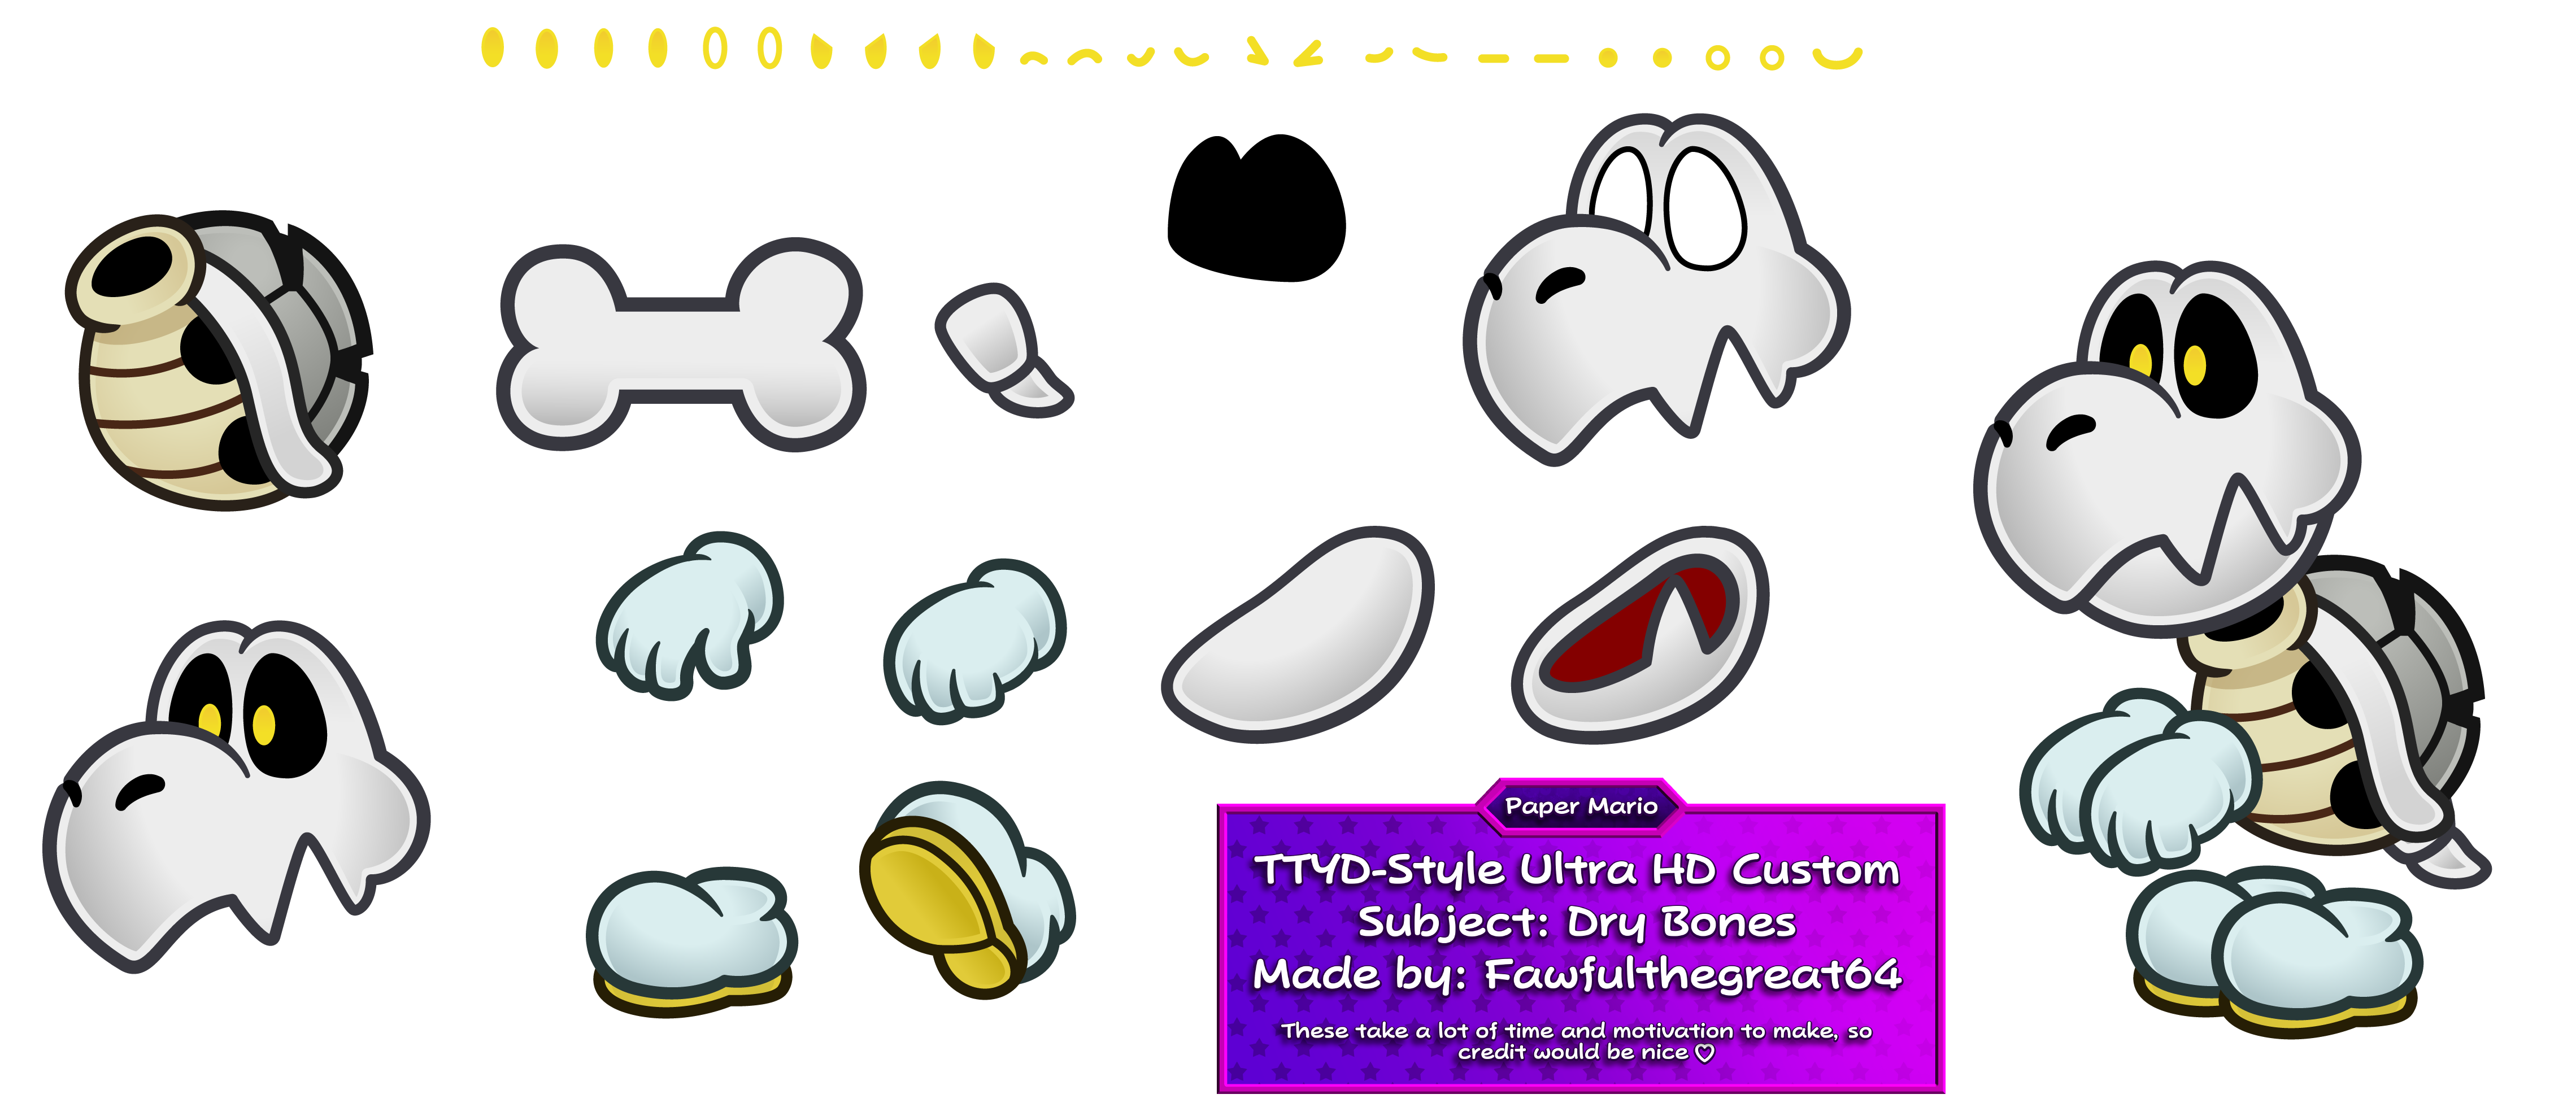 Mario Customs - Dry Bones (Modern, TTYD-Style, HD)